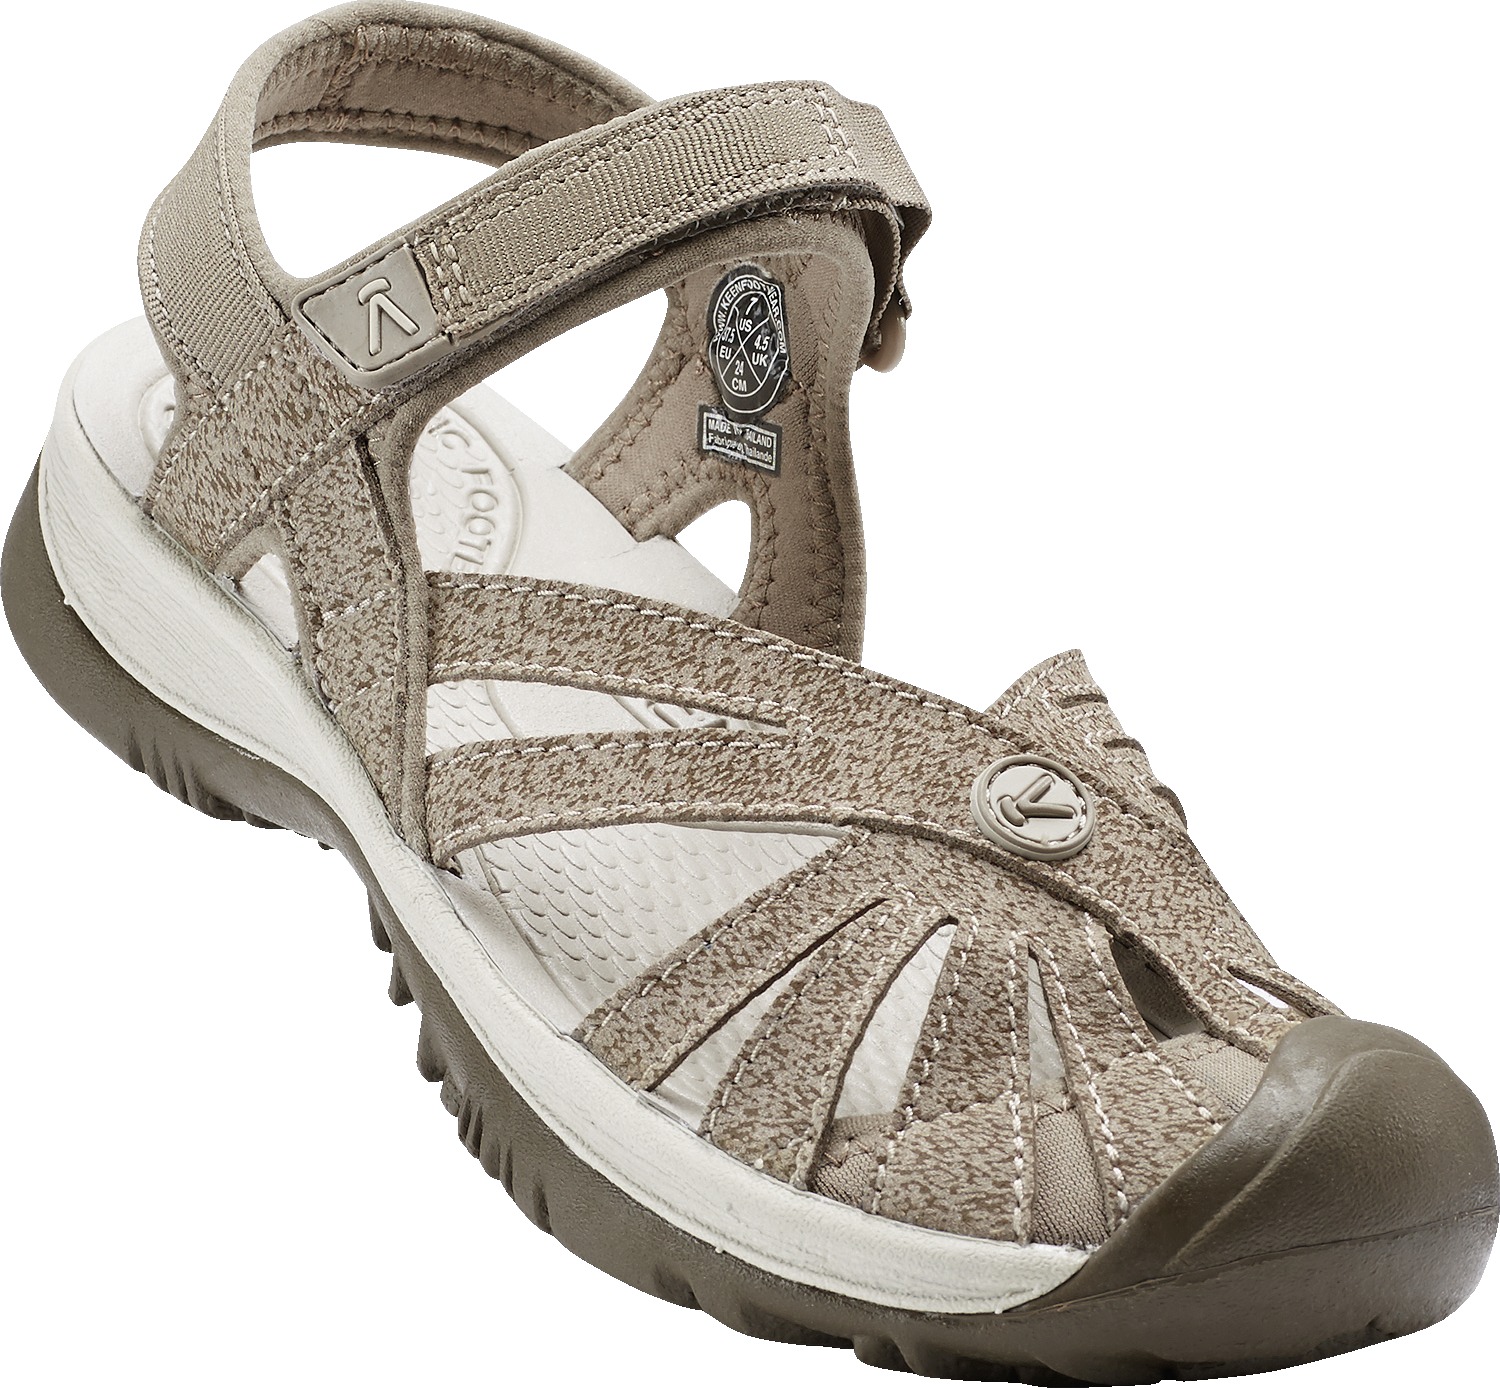 Keen dámské sandály Rose Sandal Women - Brindle/Shitake Barva: brindle/shitake, Velikost: 4,5 UK (37,5 EU / 24 cm)